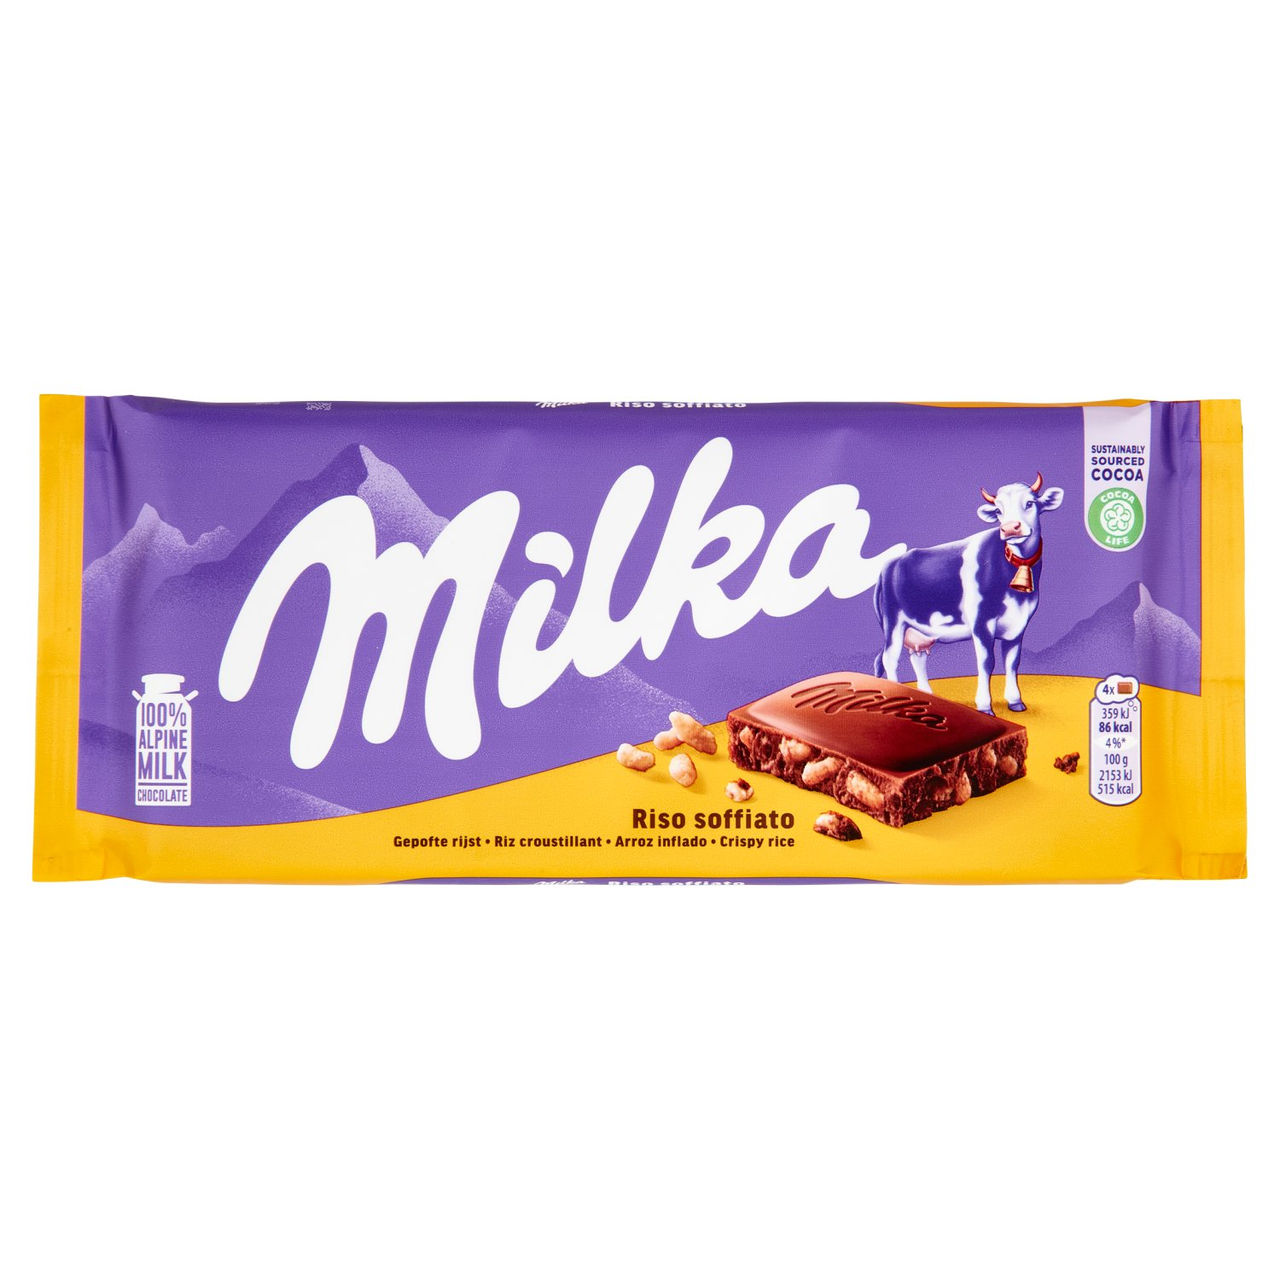 Milka Chocolate | Milka 100% Alpine Milk Chocolate Bar With Puffed Rice ...